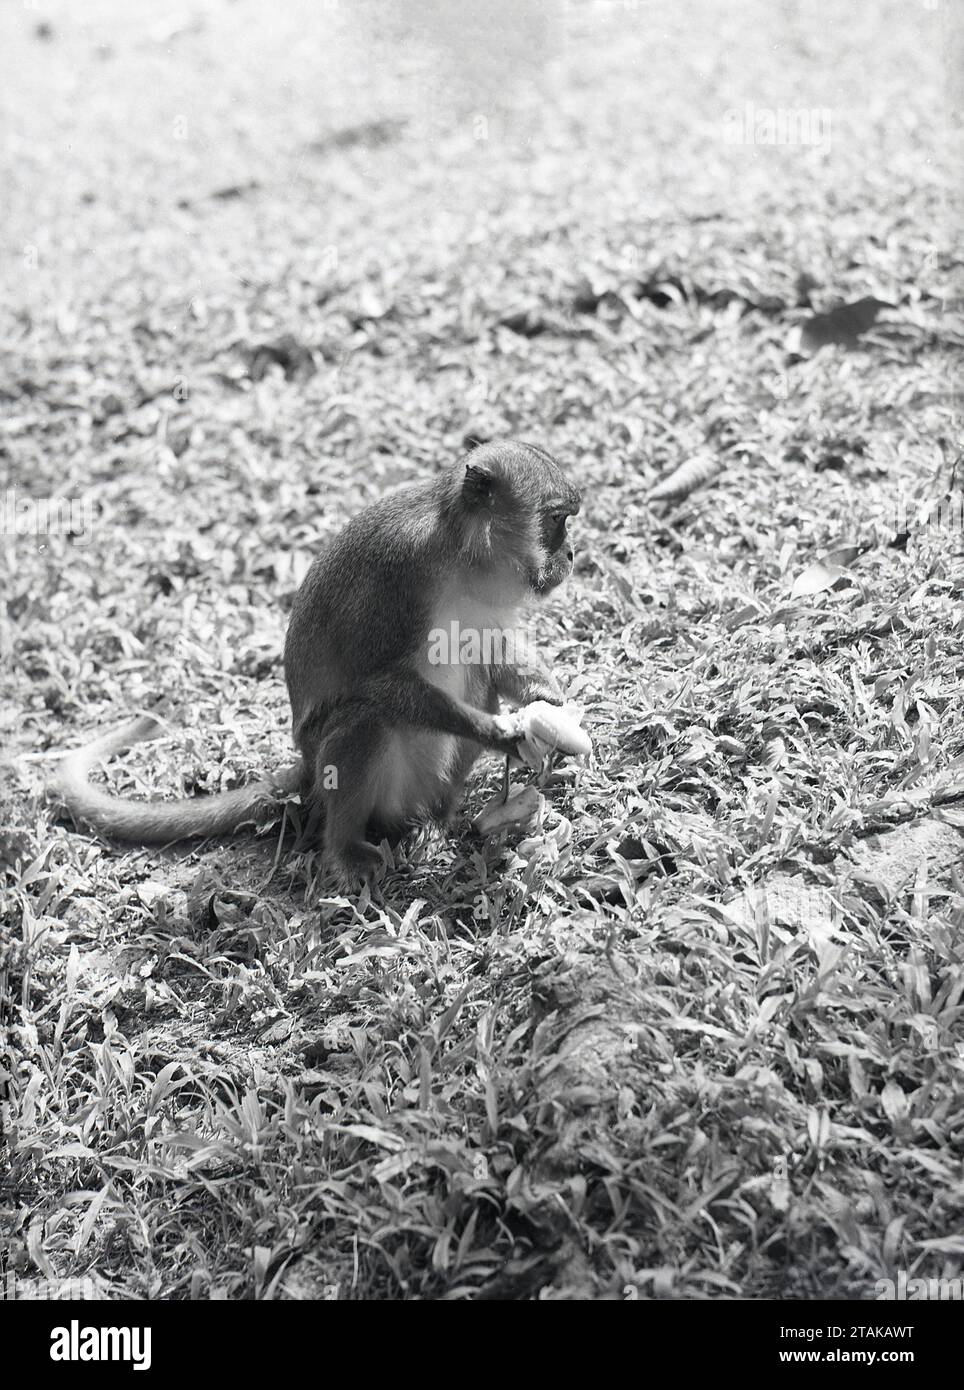 1960s, historical, small monkey on ground. Stock Photo